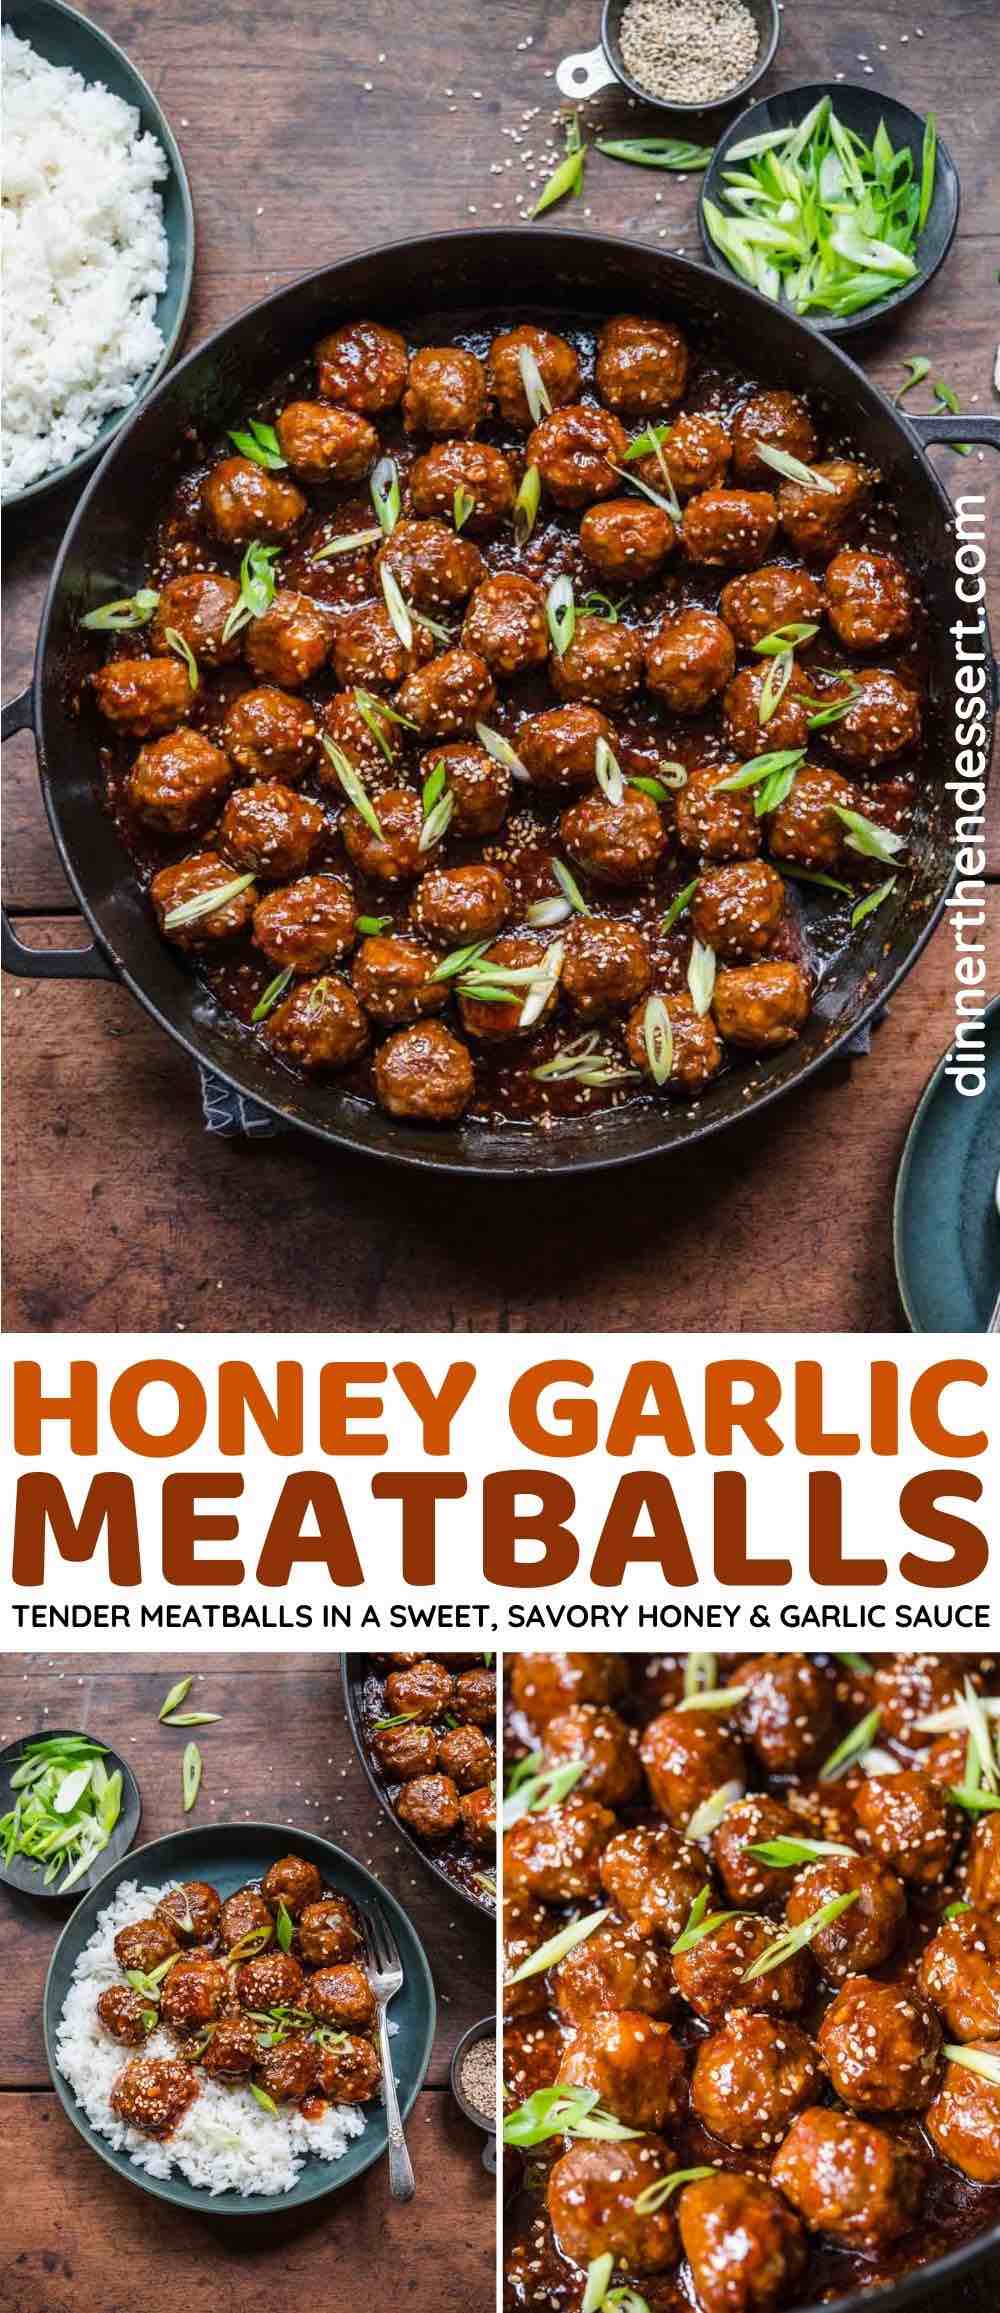 https://dinnerthendessert.com/wp-content/uploads/2021/07/Honey-Garlic-Meatballs-L.jpg